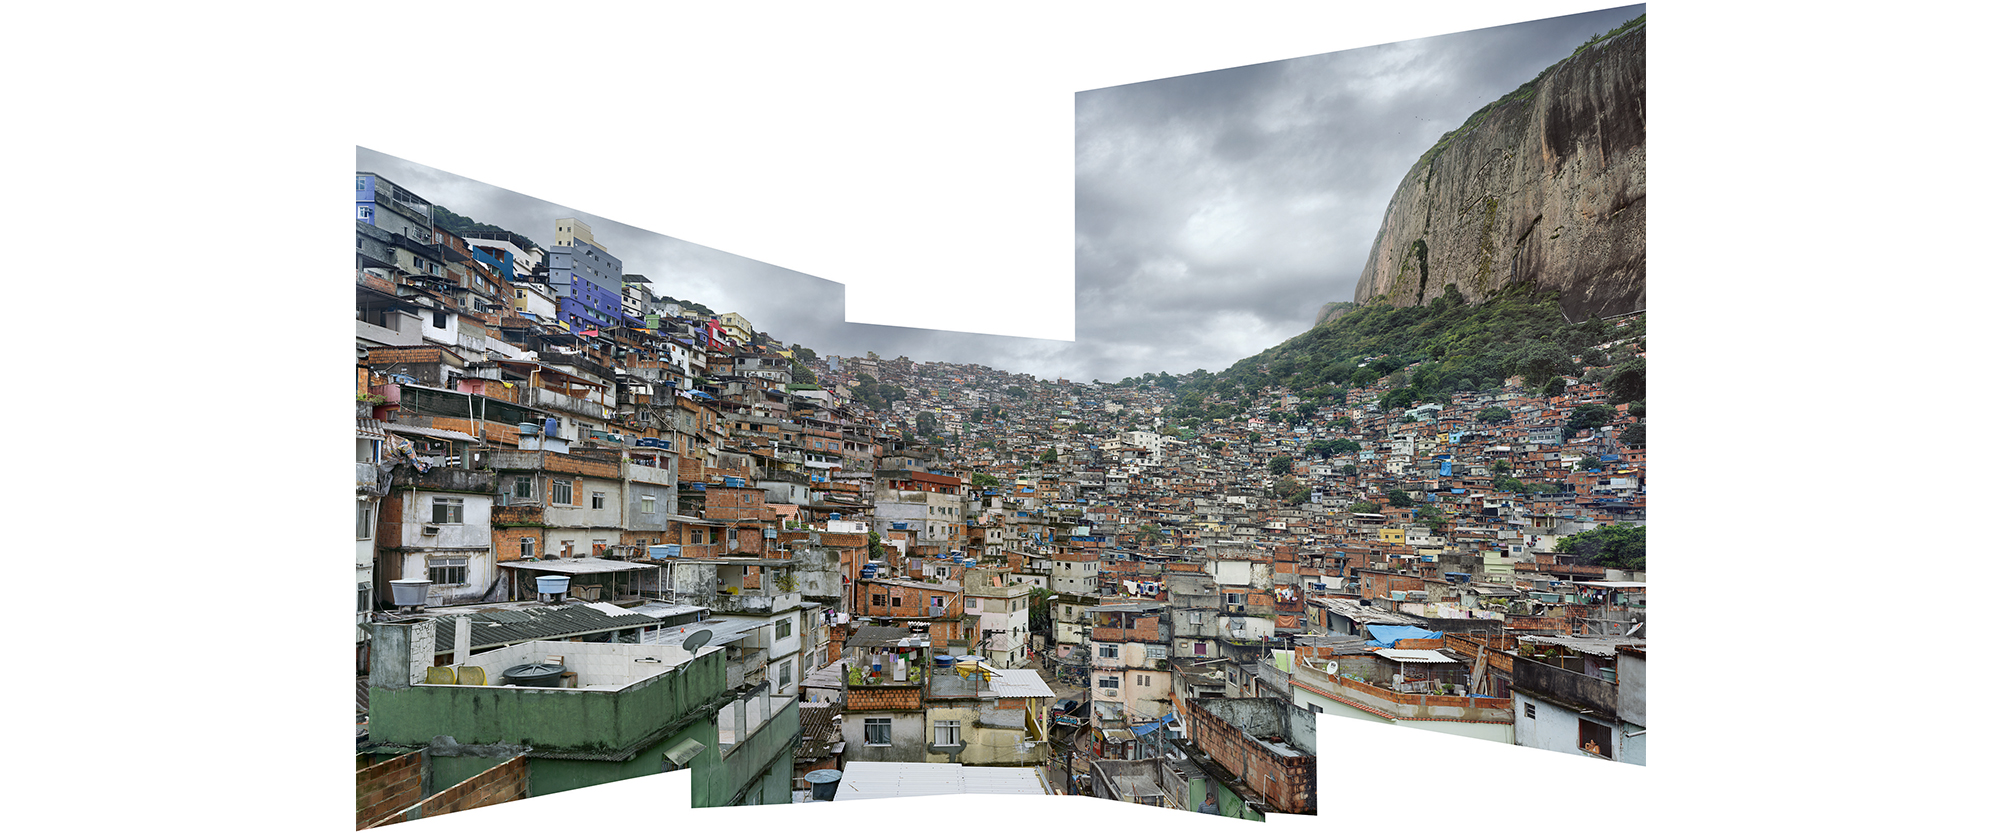 1_Brazil-RP_Rocinha_small-copy.jpg